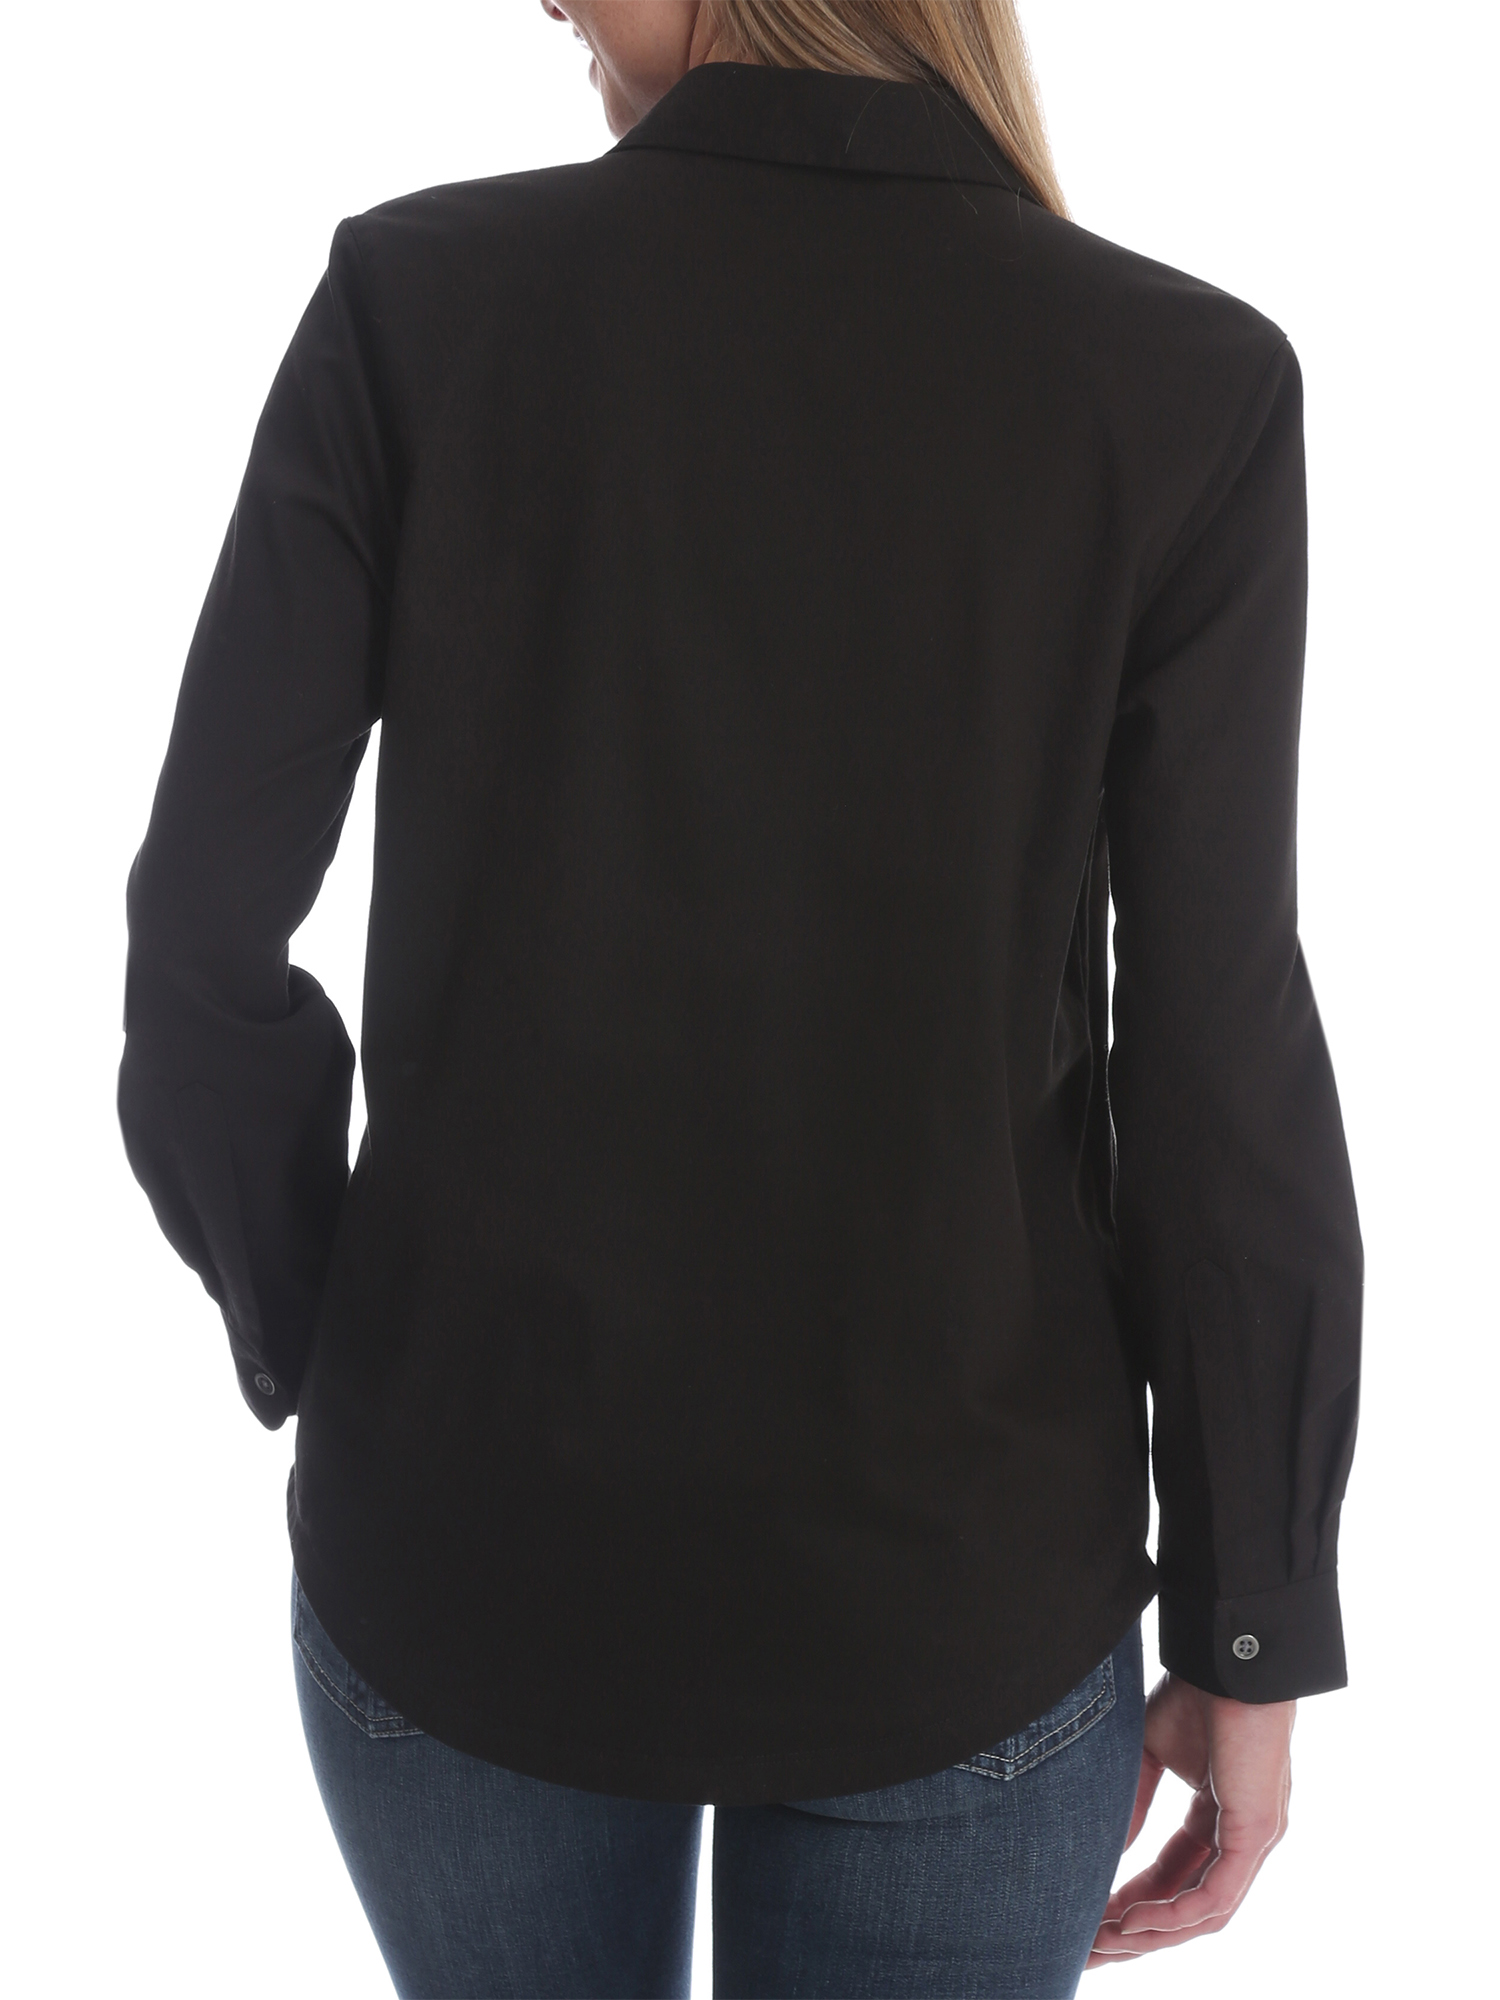 Women's Fleece Lined Flannel Shirt - image 2 of 5